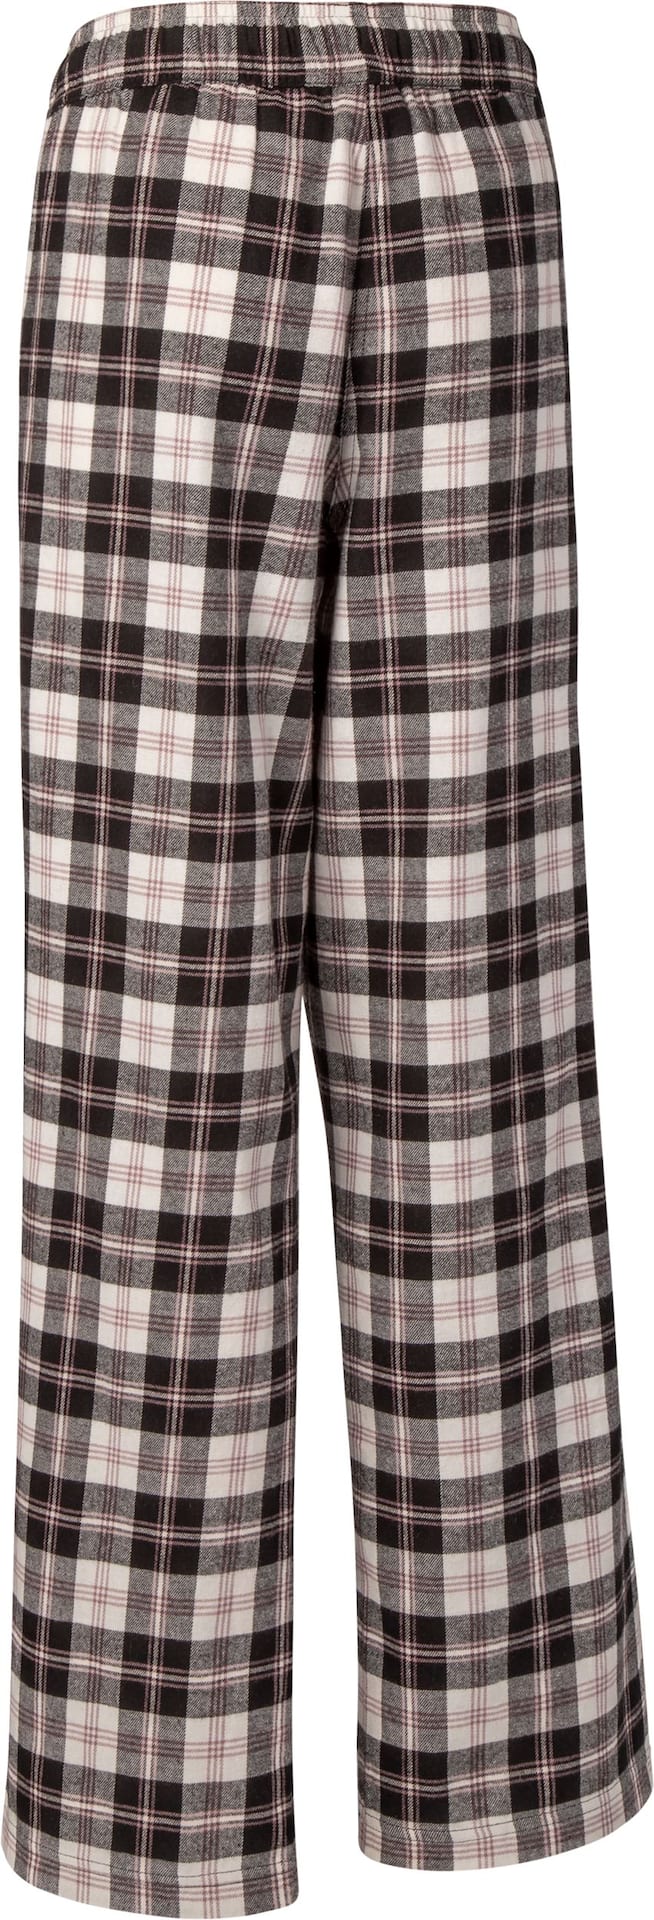 EXP Women's Plaid Pajama Pants